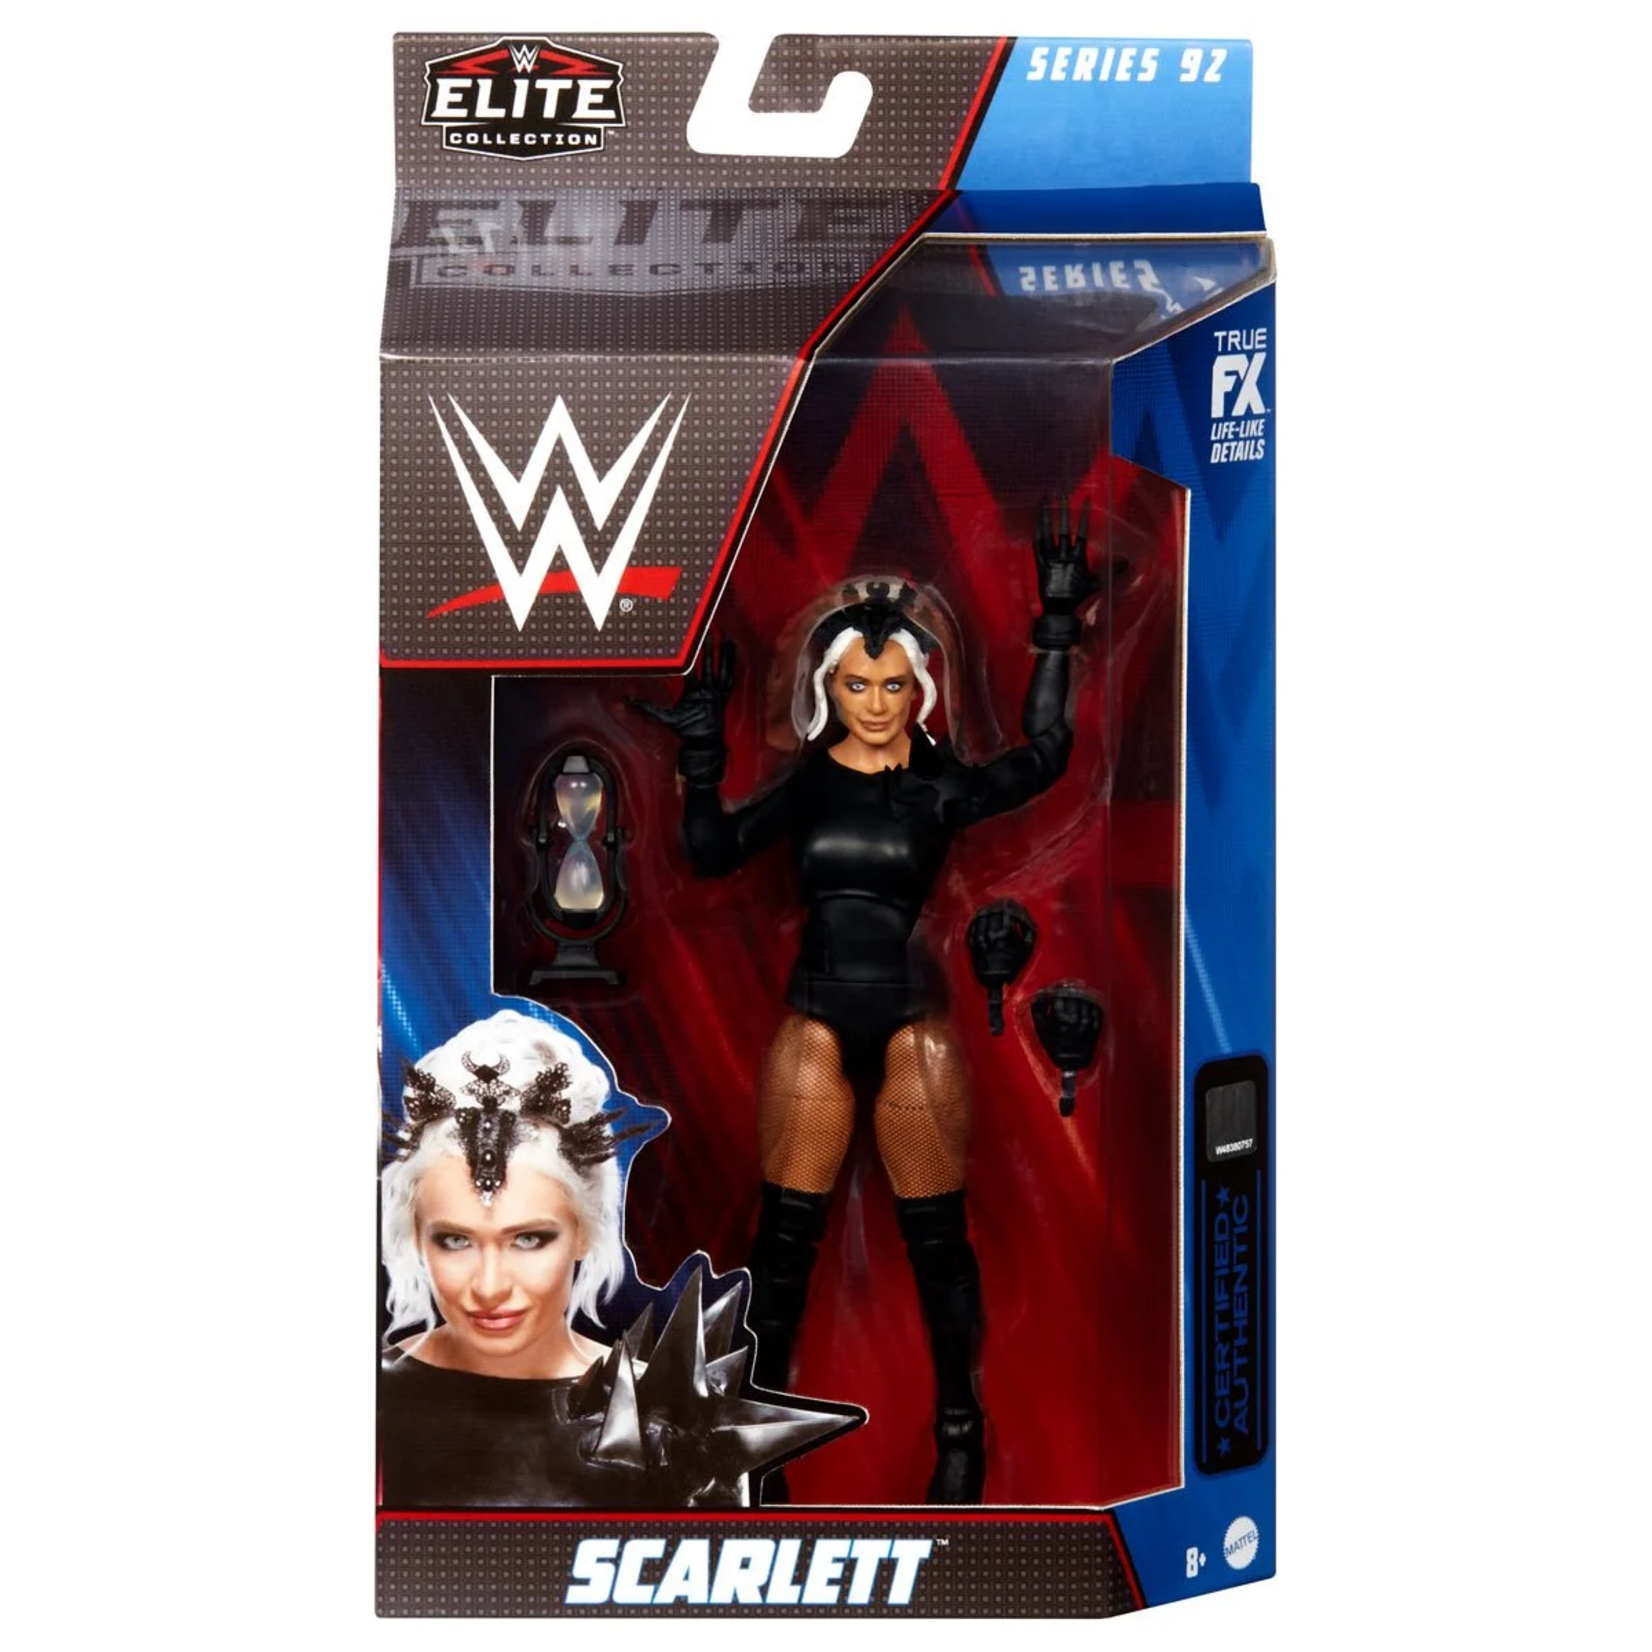 WWE Elite Collection WWE Elite Collection Series 92 Scarlett Action Figure